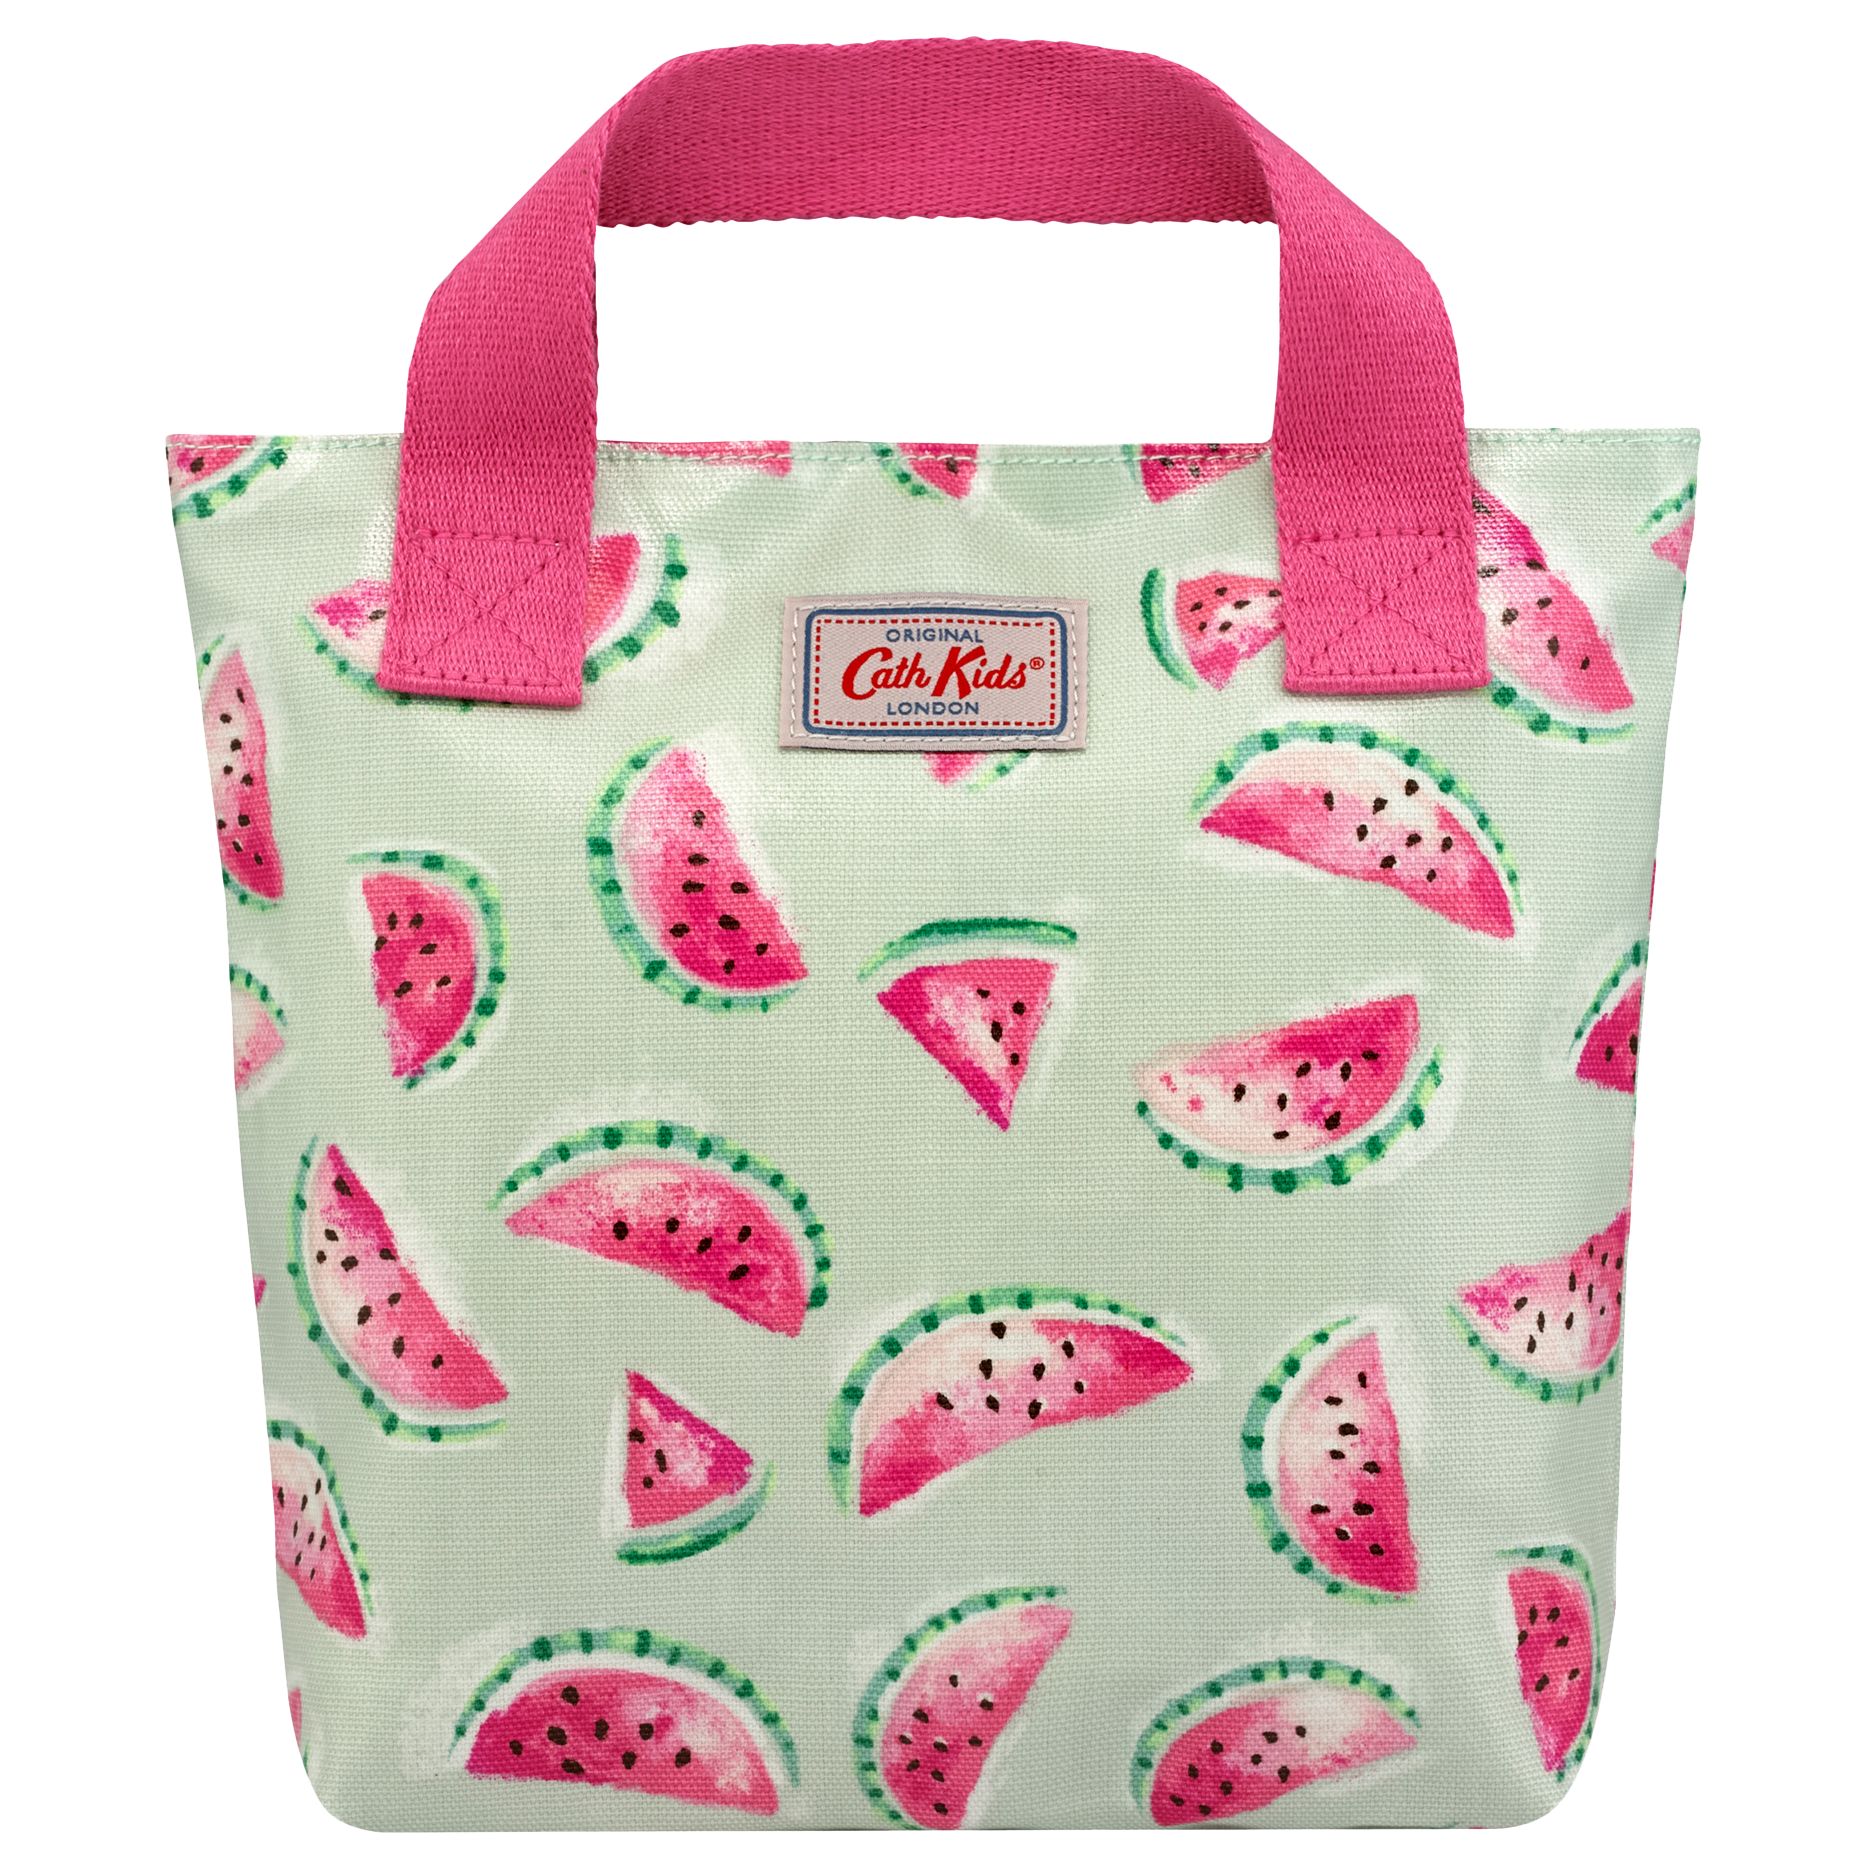 cath kidston watermelon bag